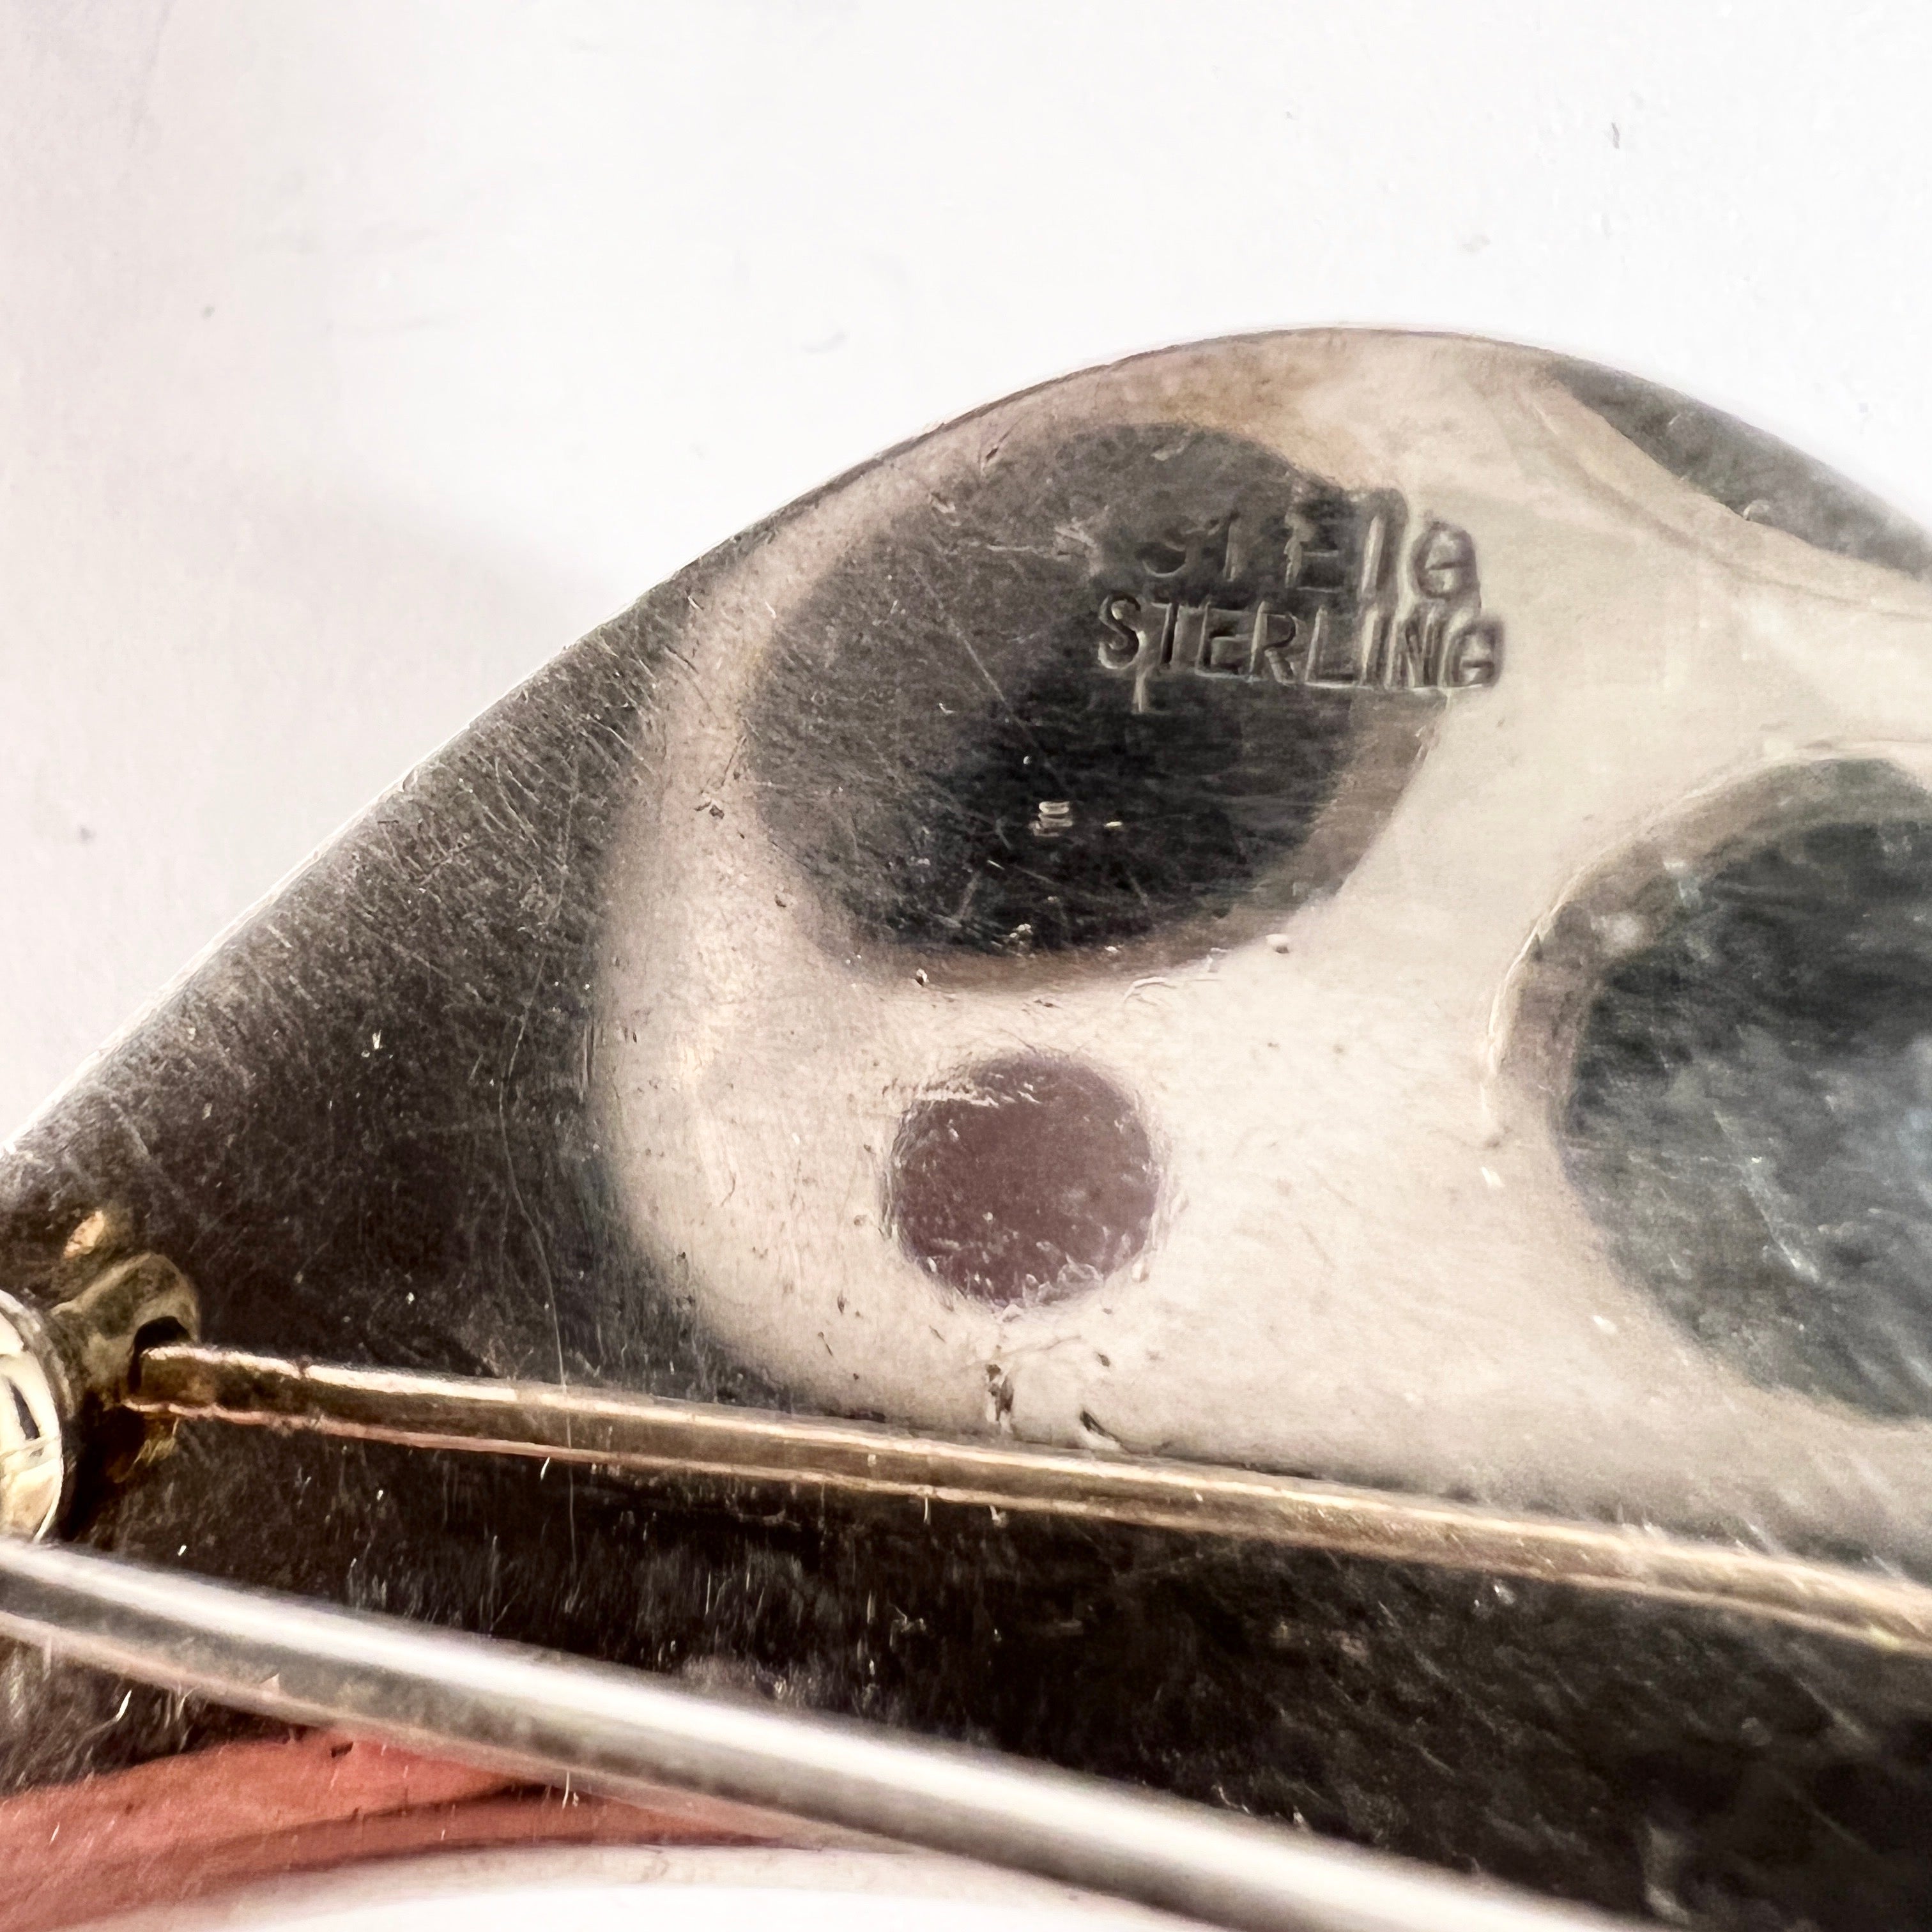 Henry Steig, USA. Vintage Mid Century Modern Sterling Silver Brooch.